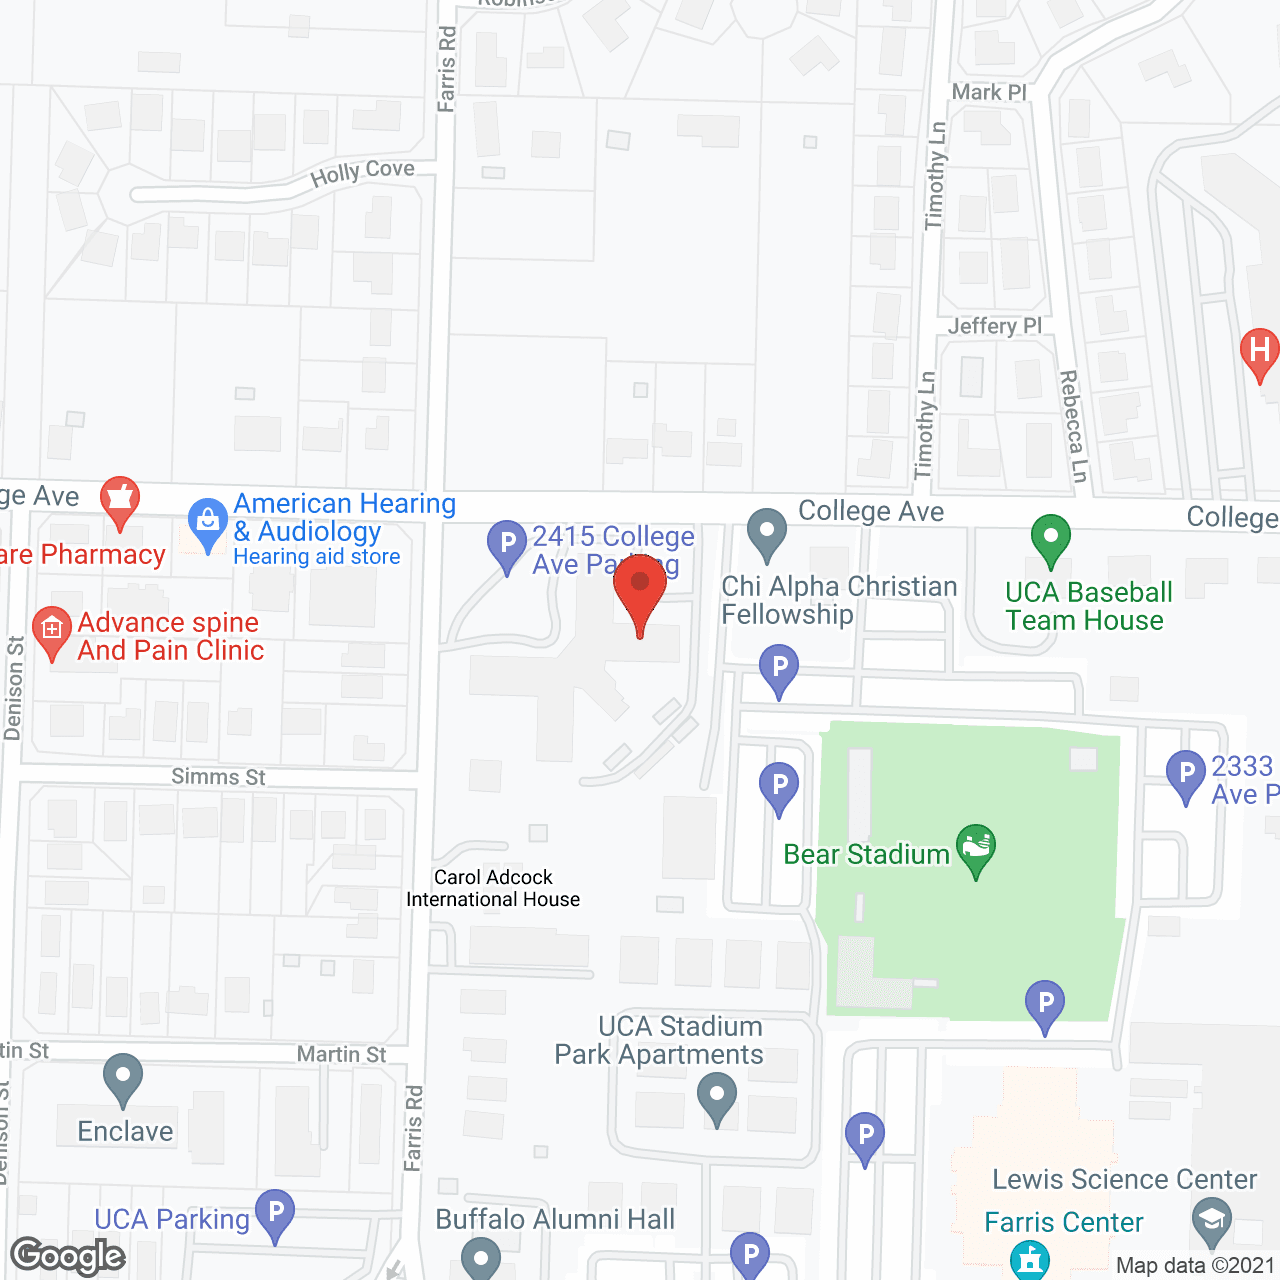 College Square in google map